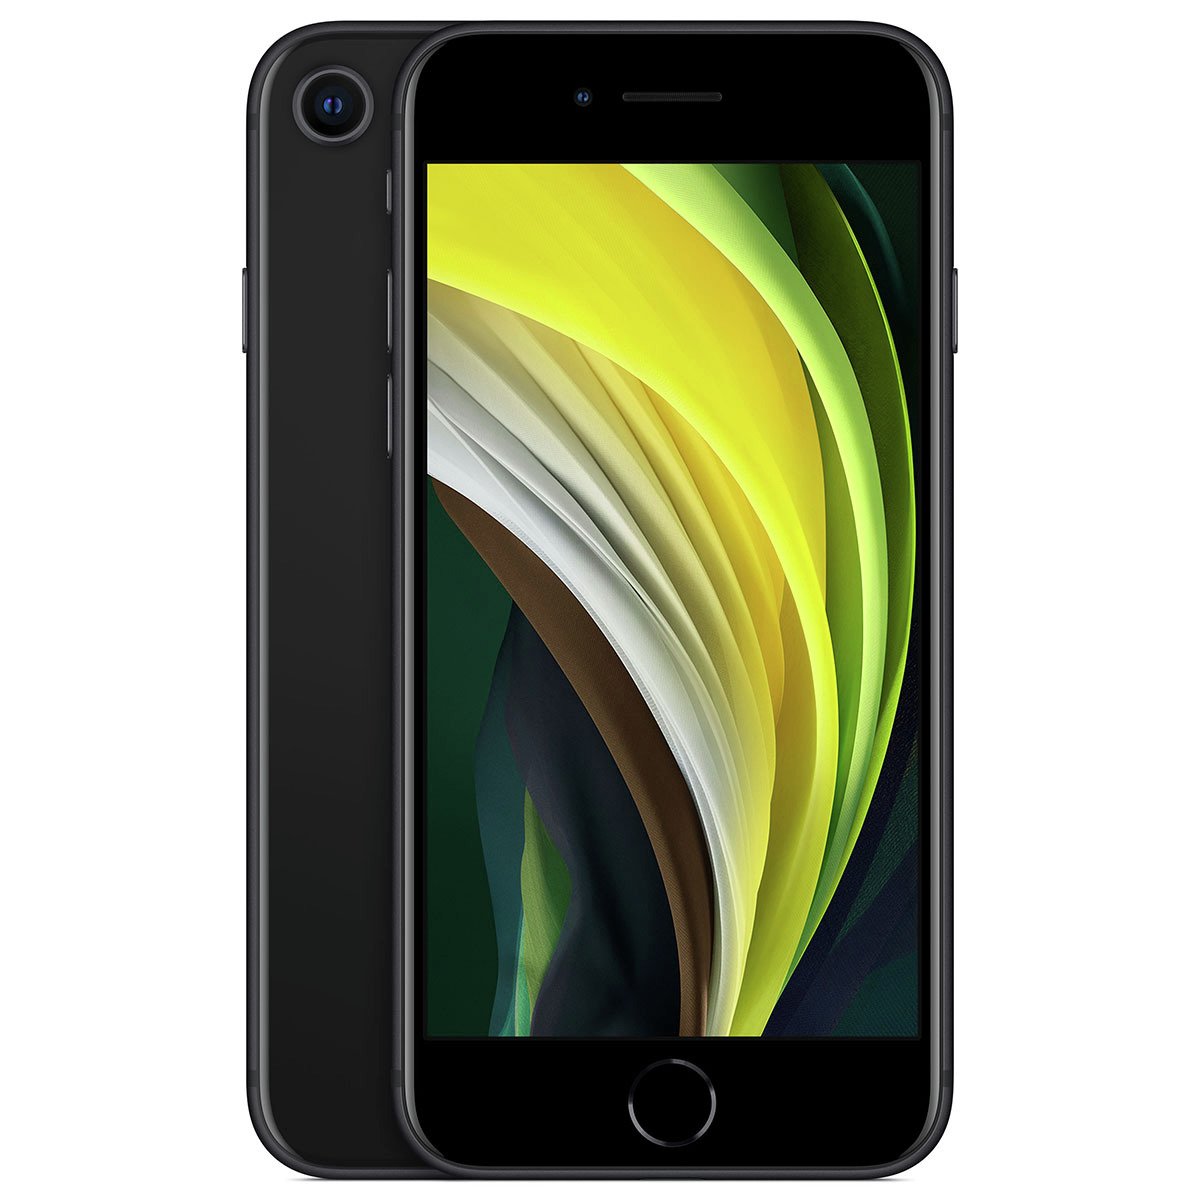 SIM Free iPhone SE 64GB Mobile Phone - Black.